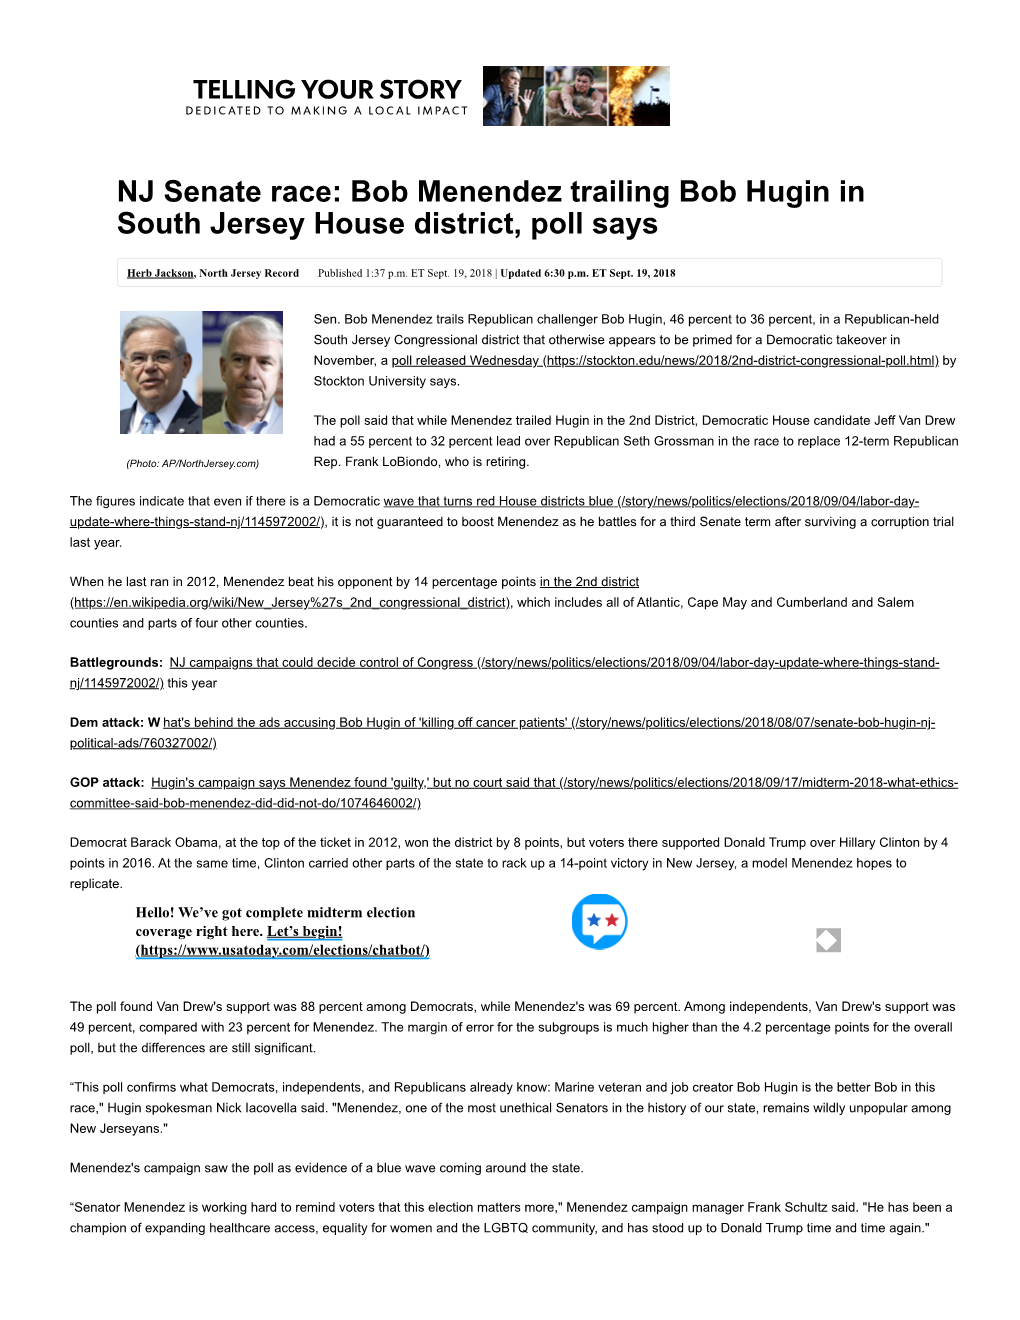 NJ Senate Race: Bob Menendez Trailing Bob Hugin in South Jersey House District, Poll Says